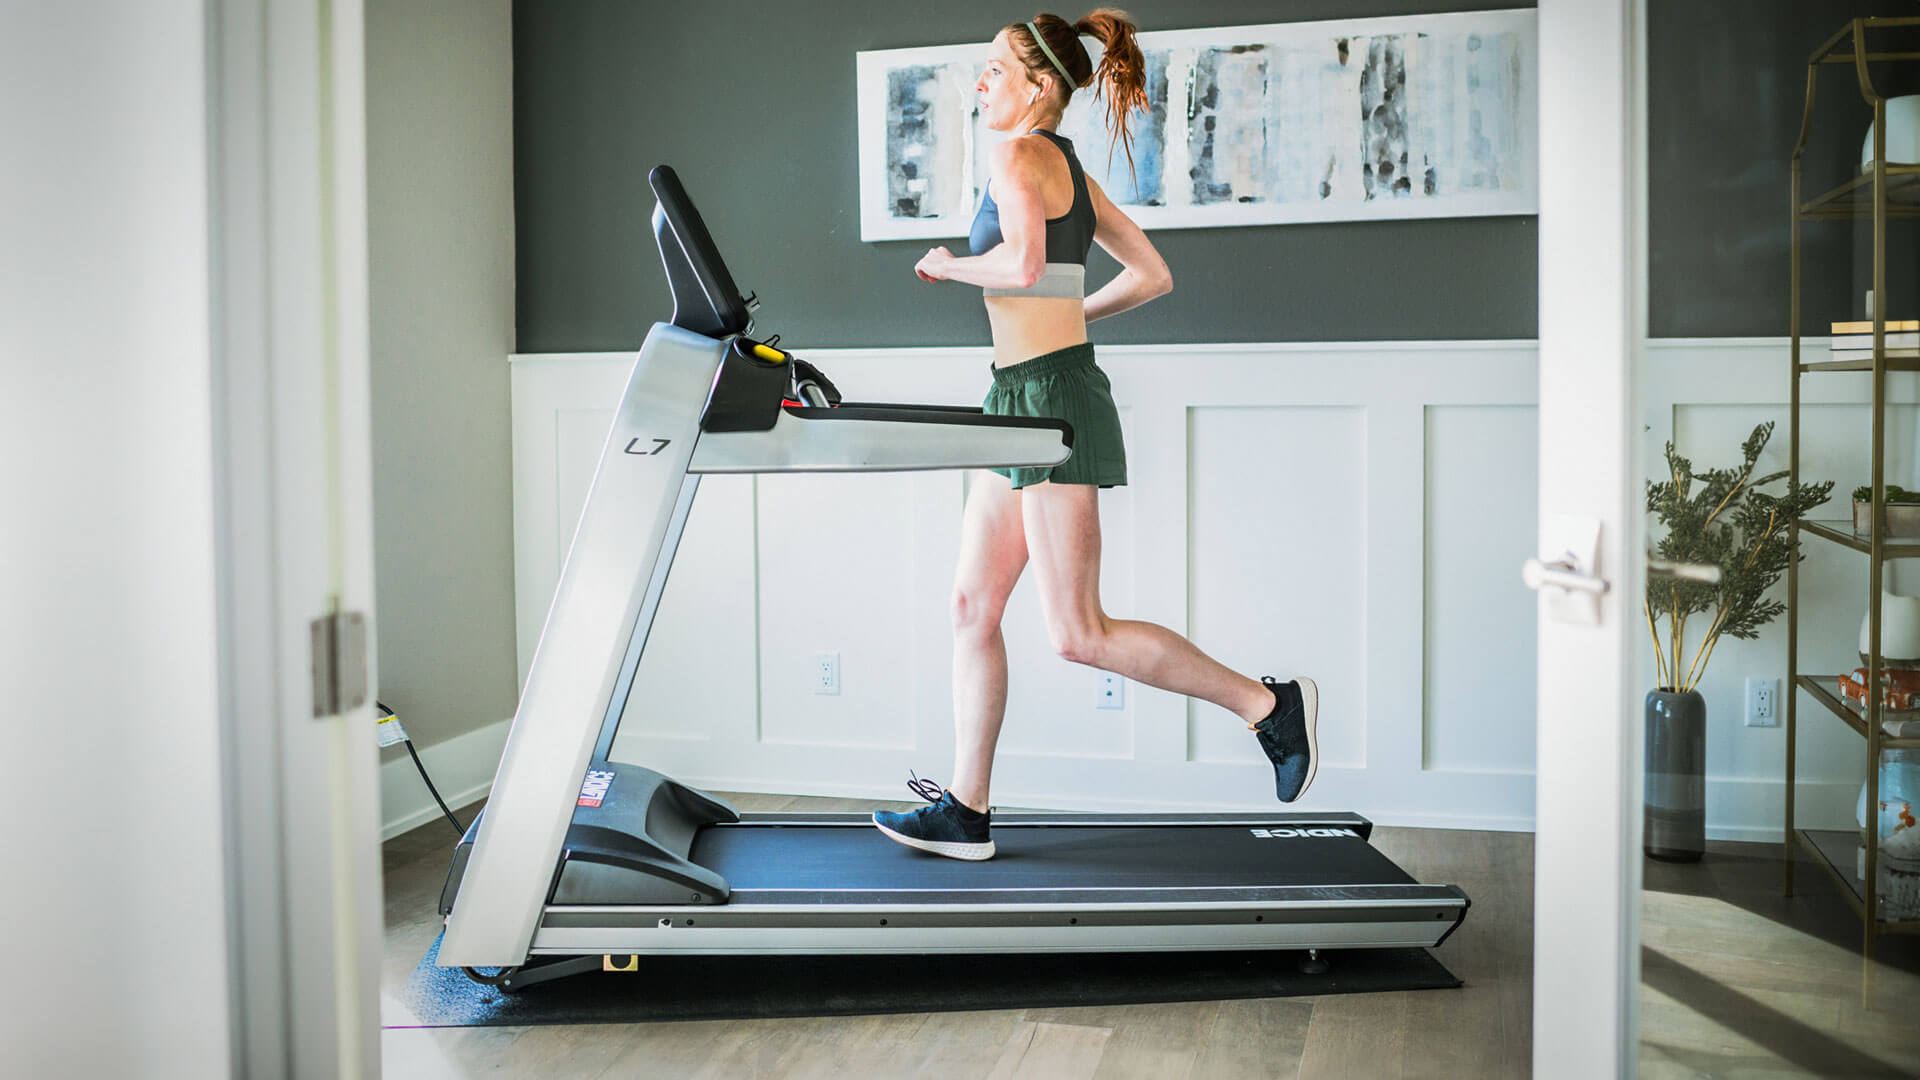 Woman running on Landice L7 treadmill